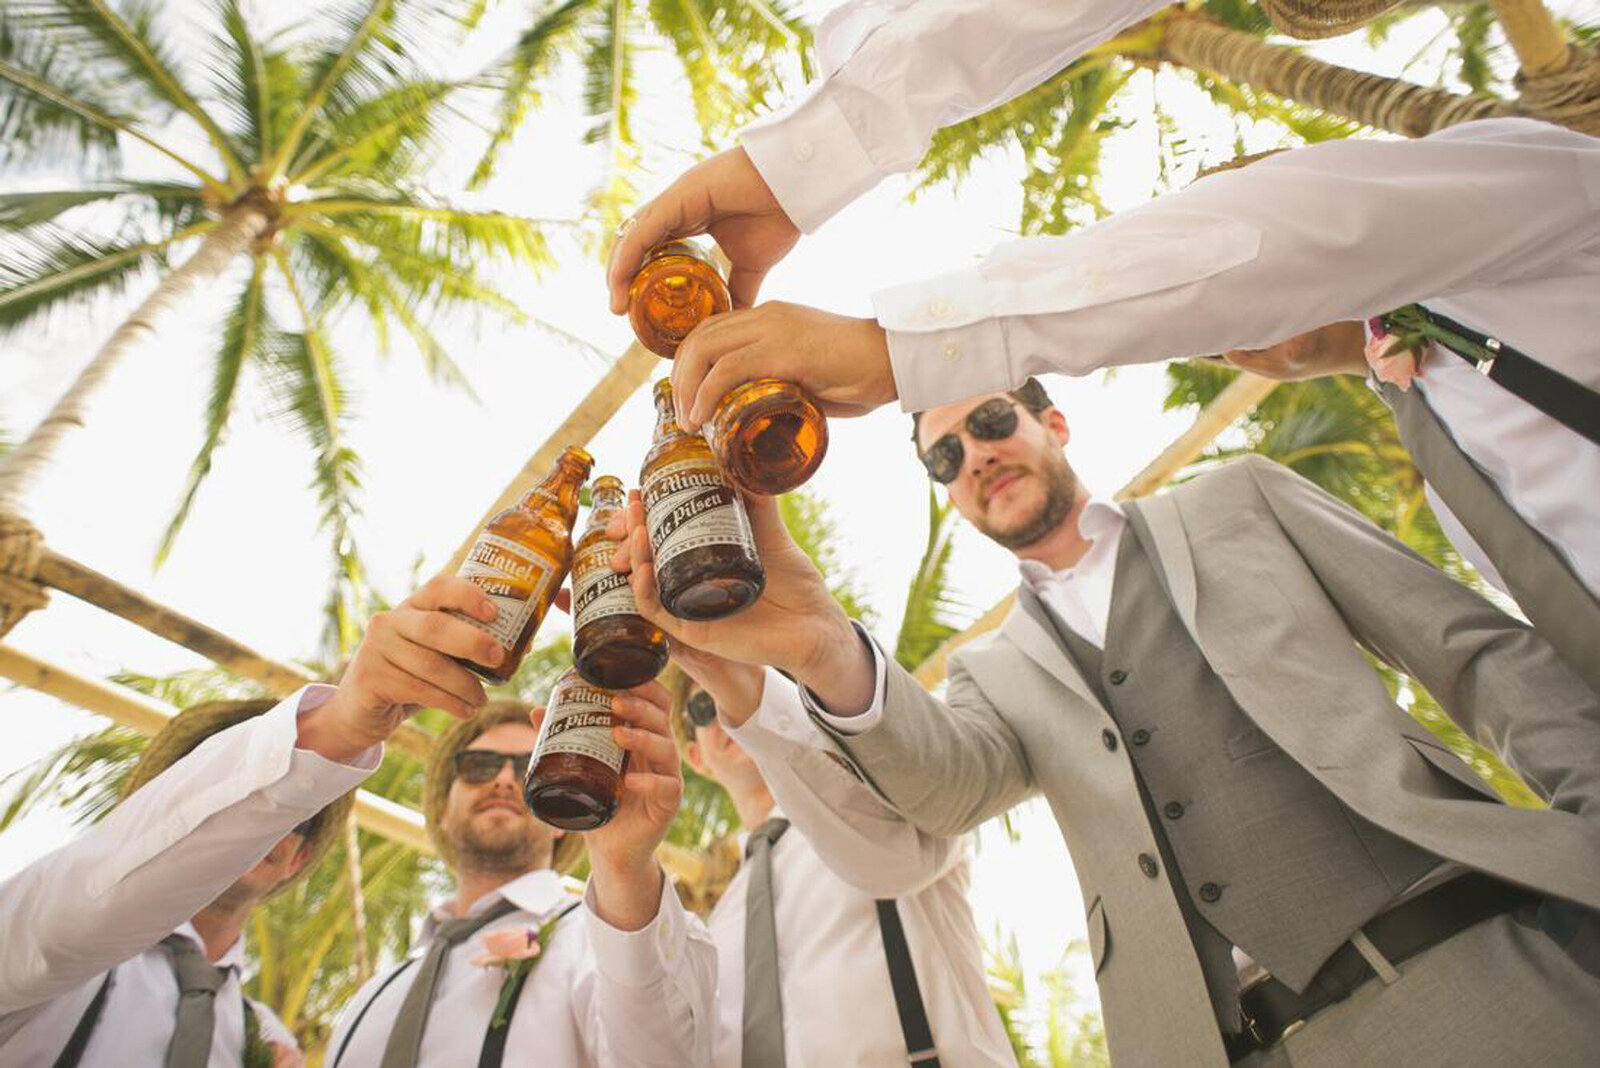 Groom's men holding a bottle of beer tossing